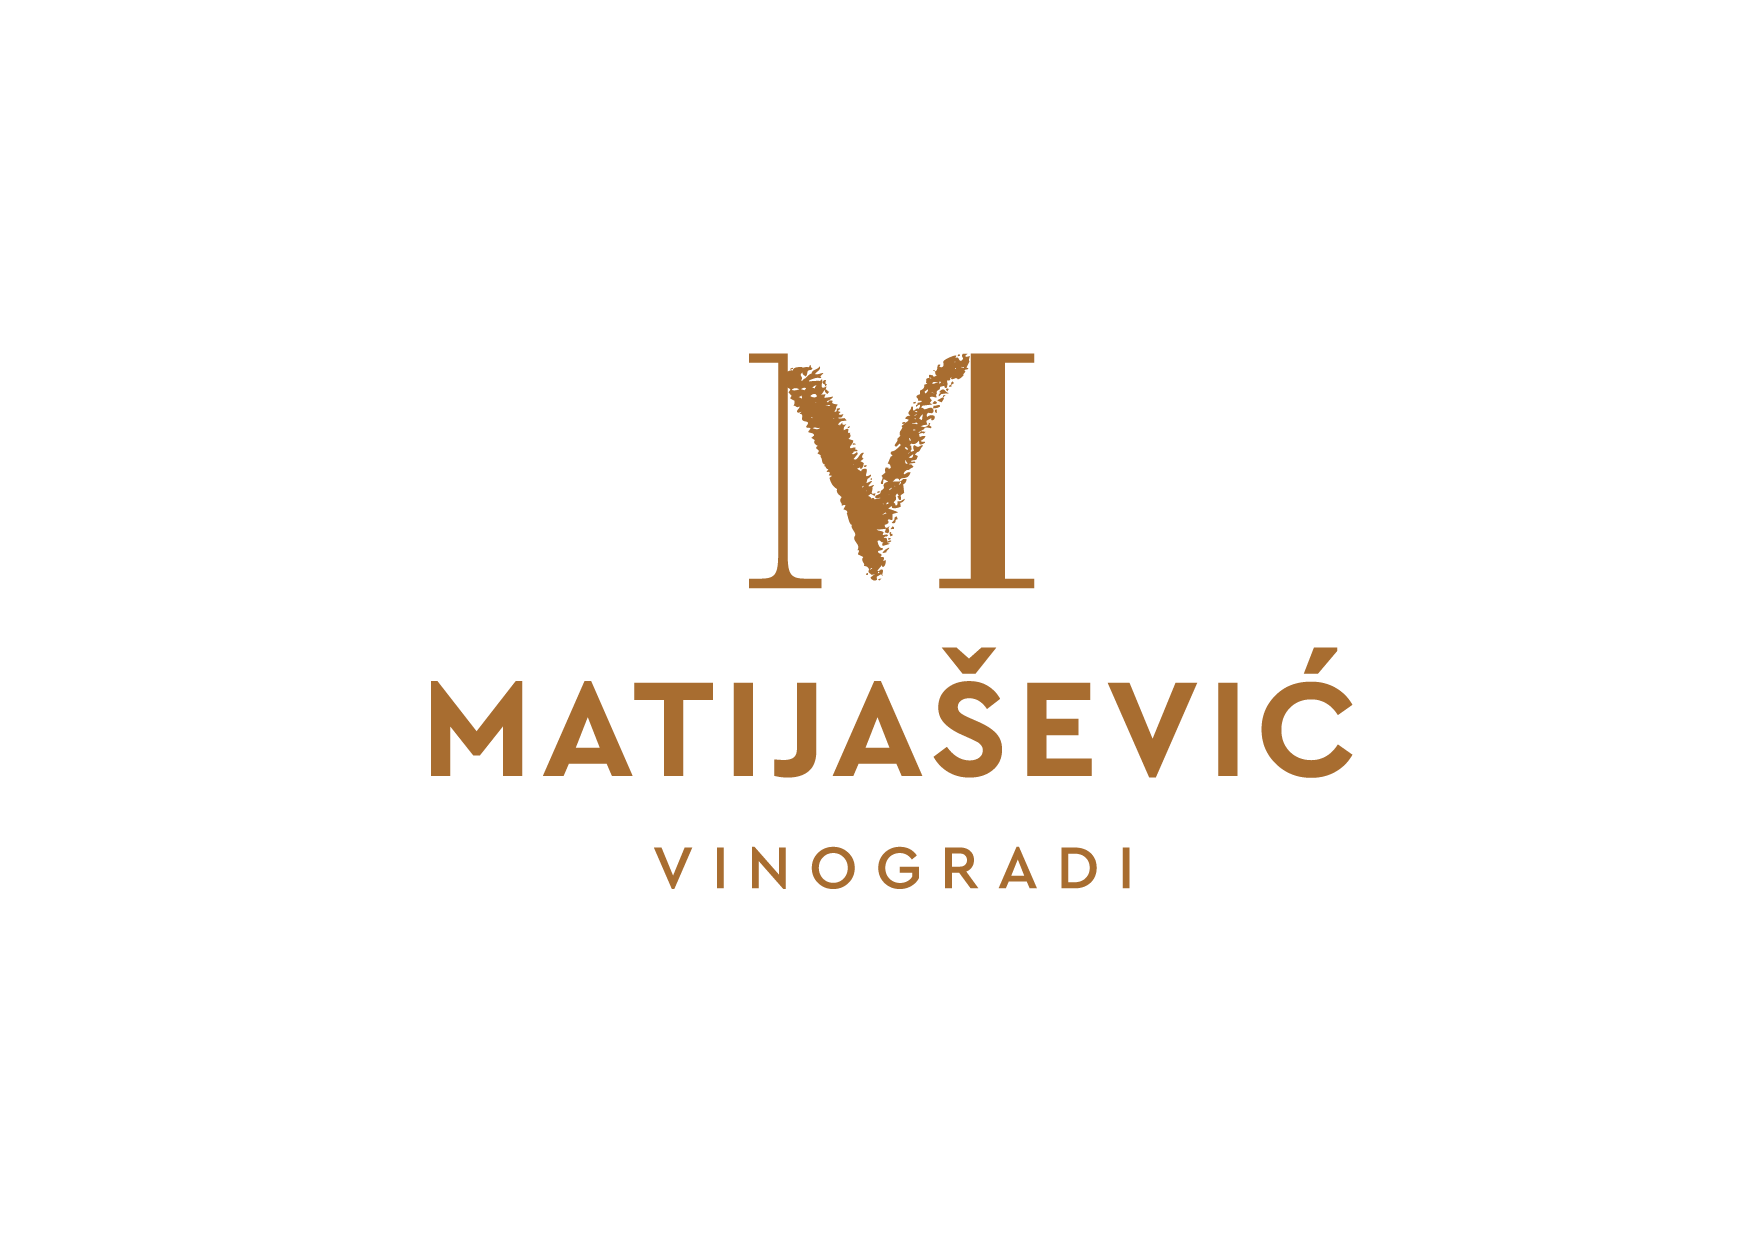 Matijaševic Vinogradi